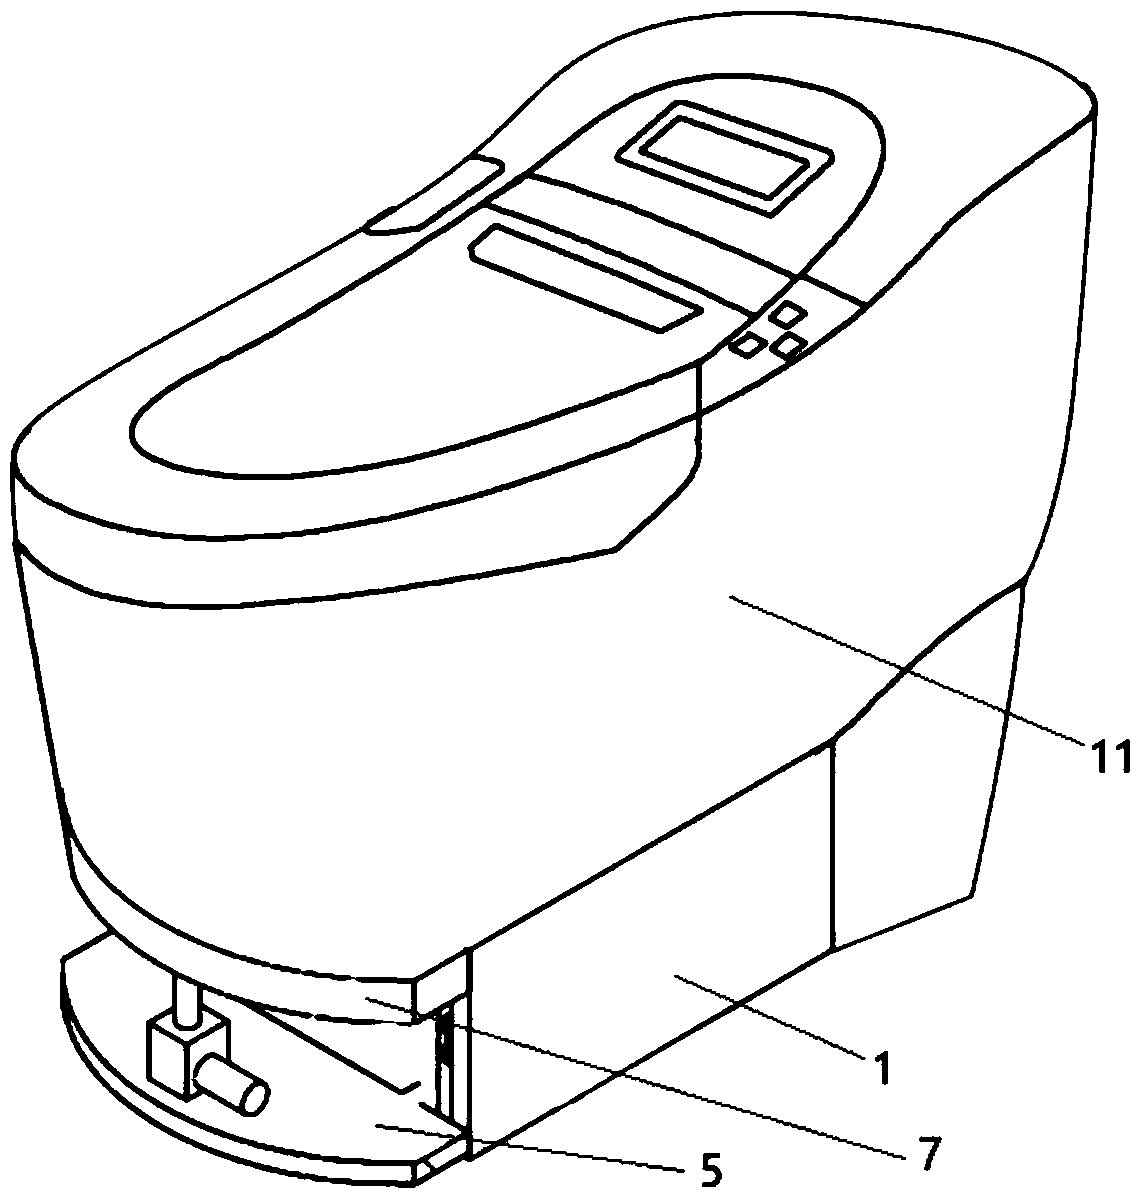 Pedestal pan with hidden type foot stool and hidden type foot stool